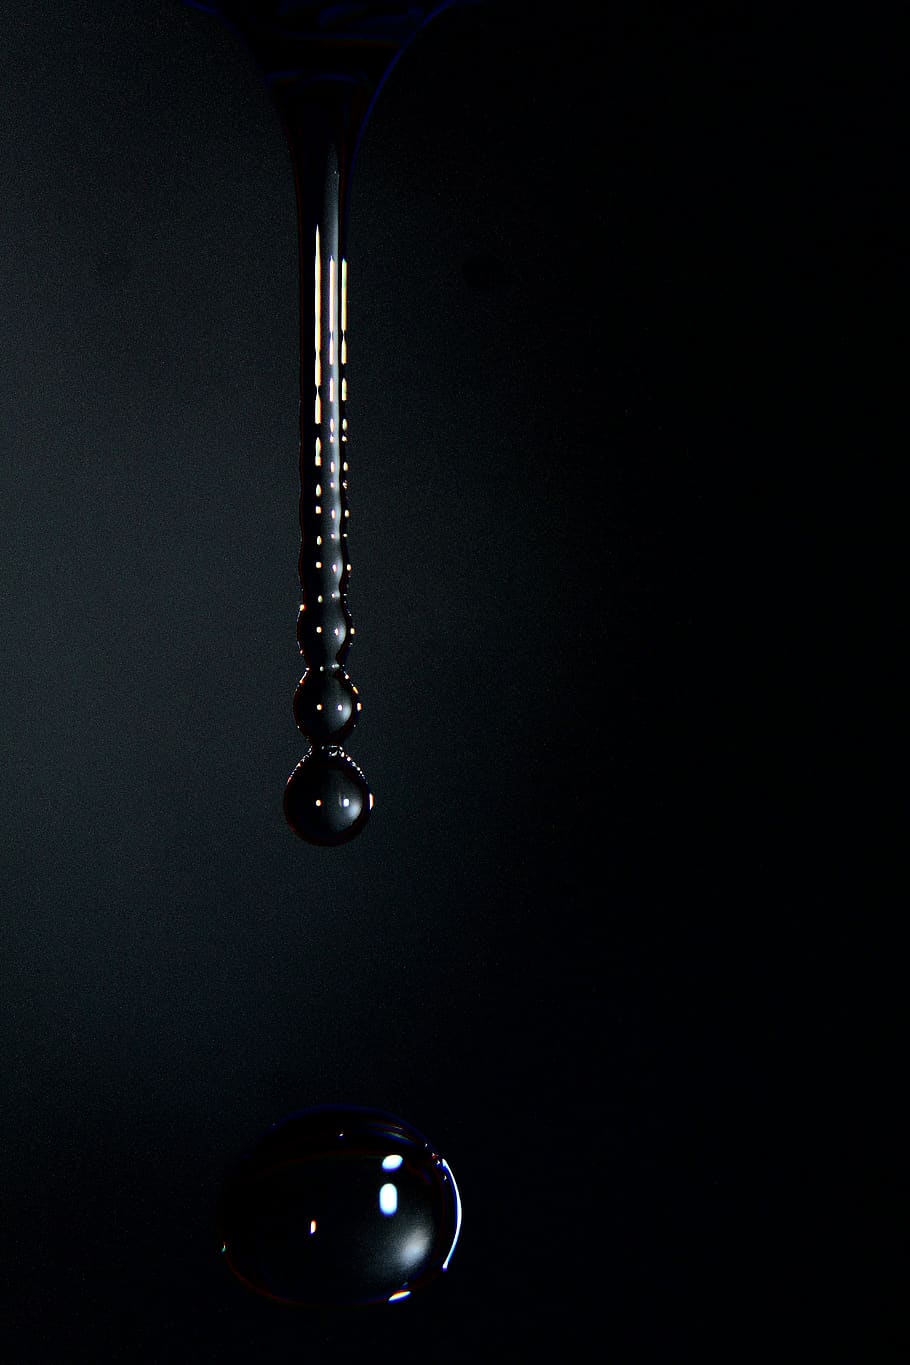 HD wallpaper: water droplets, wet, liquid, raindrops, fluid, flow